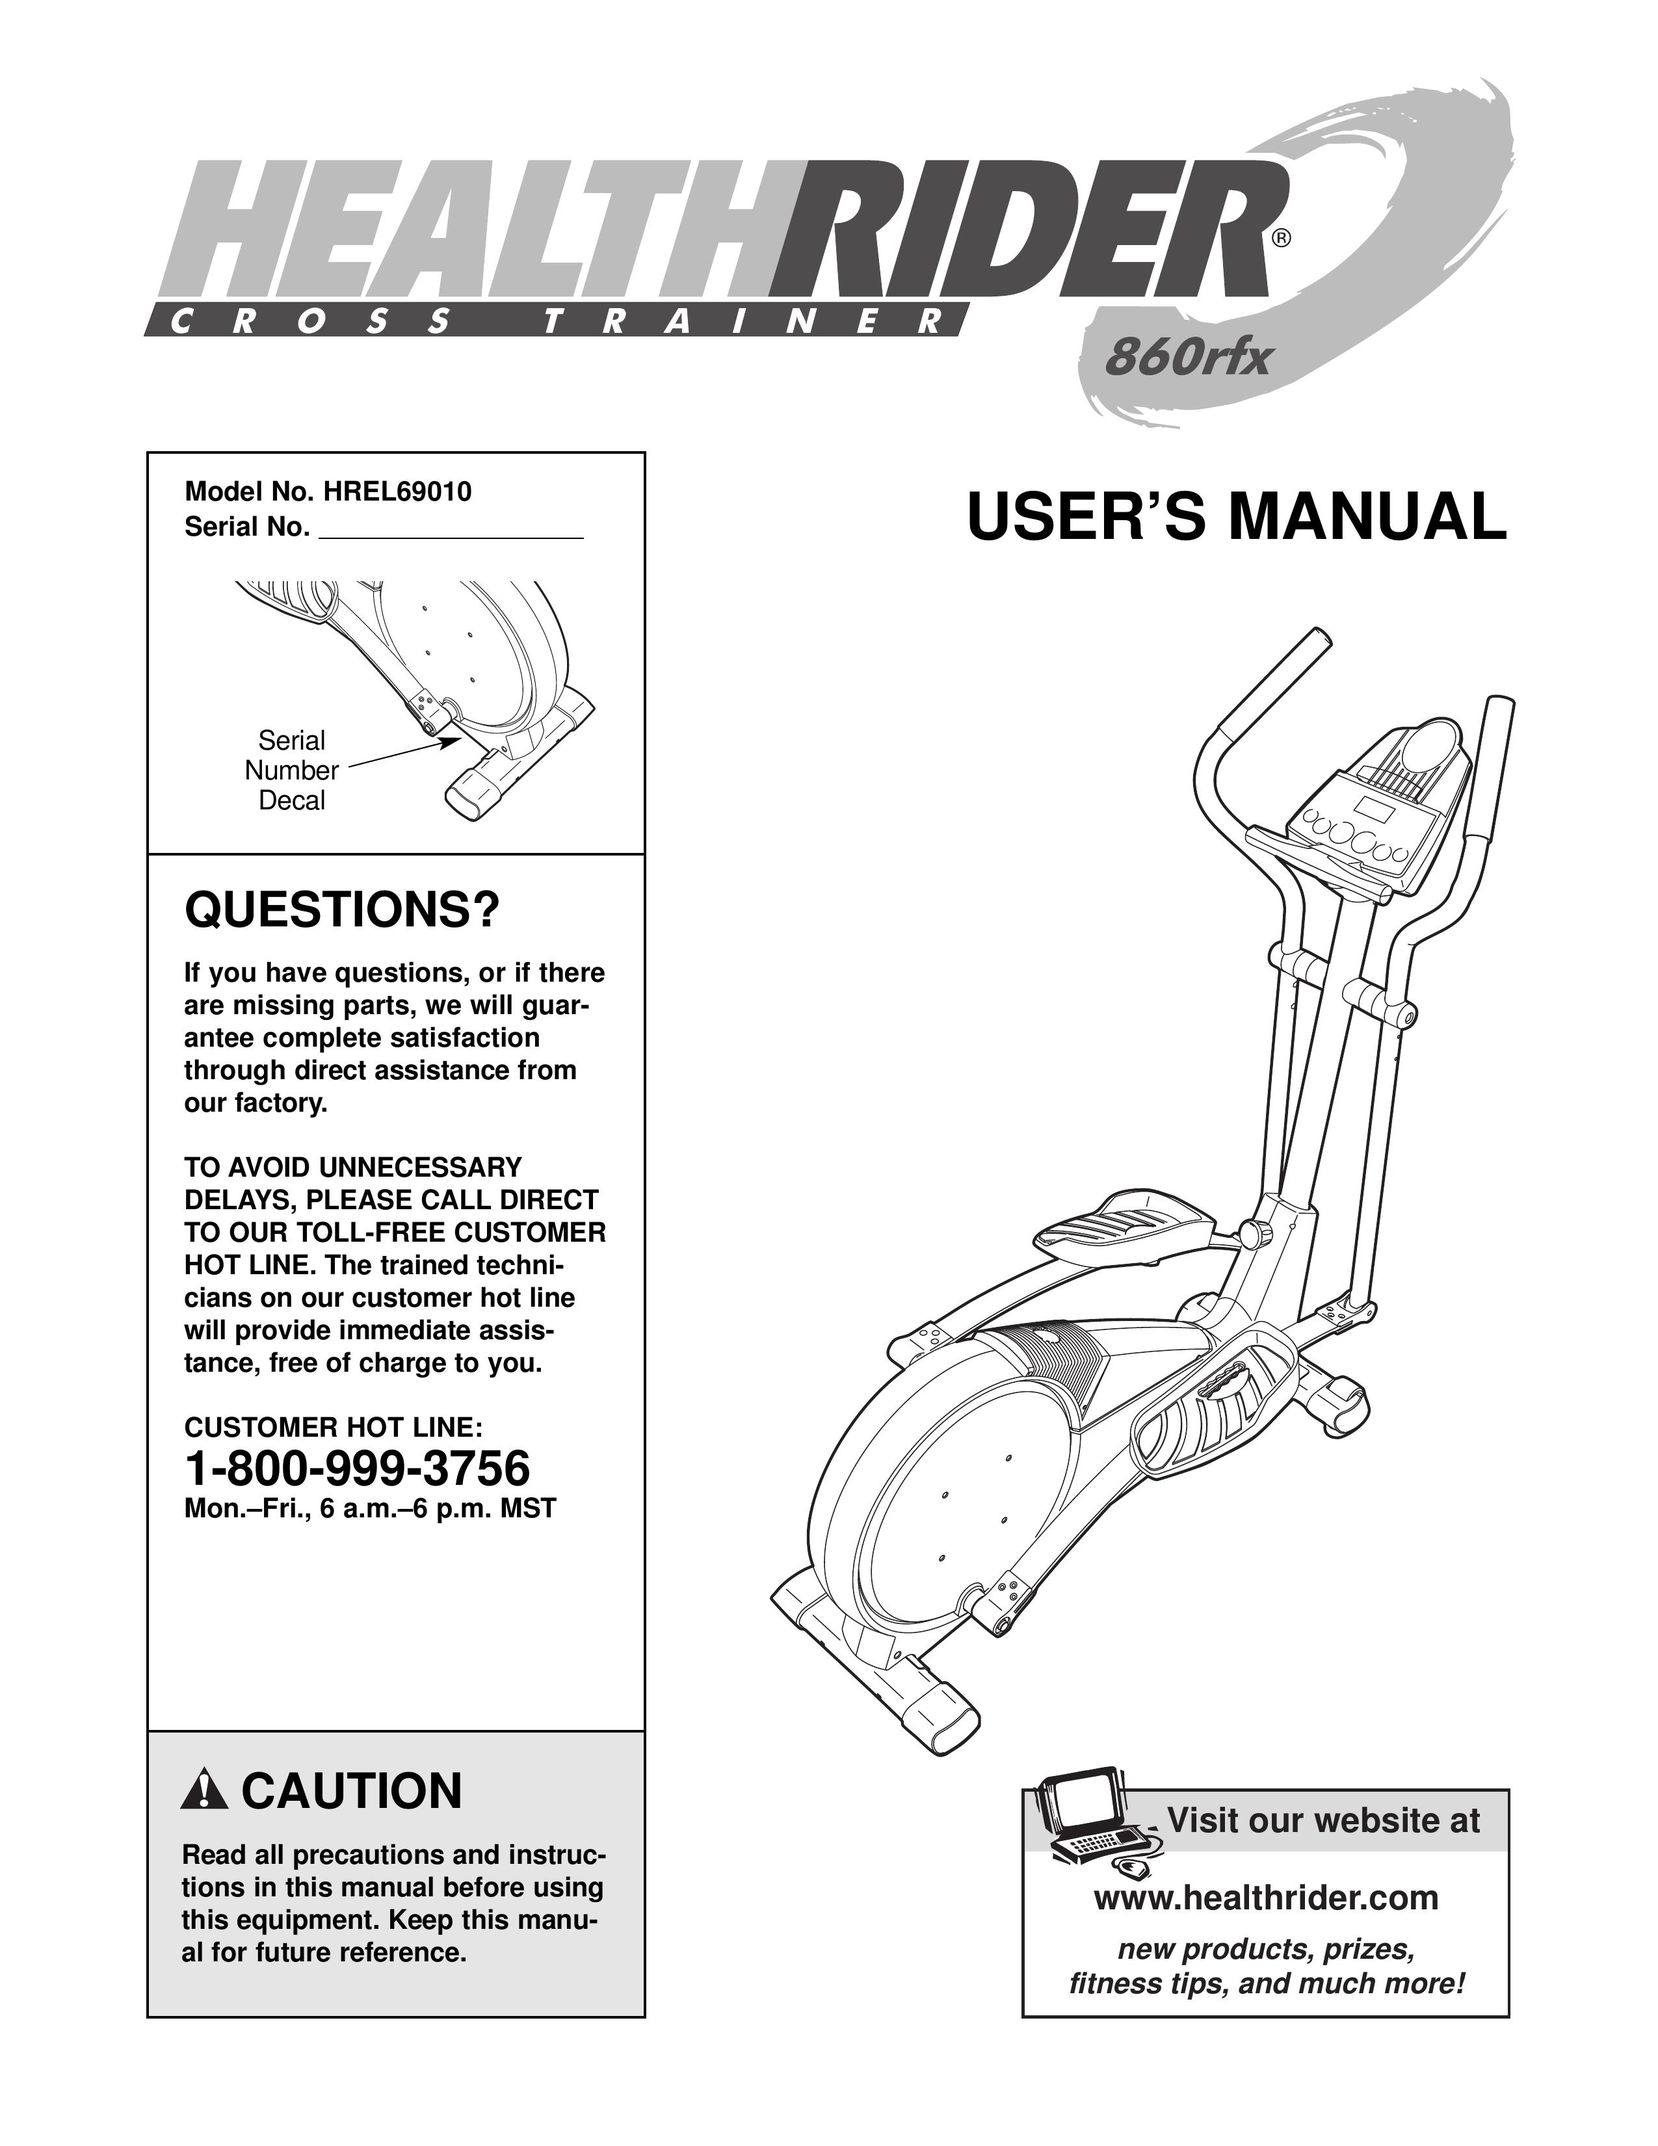 Healthrider HREL69010 Home Gym User Manual